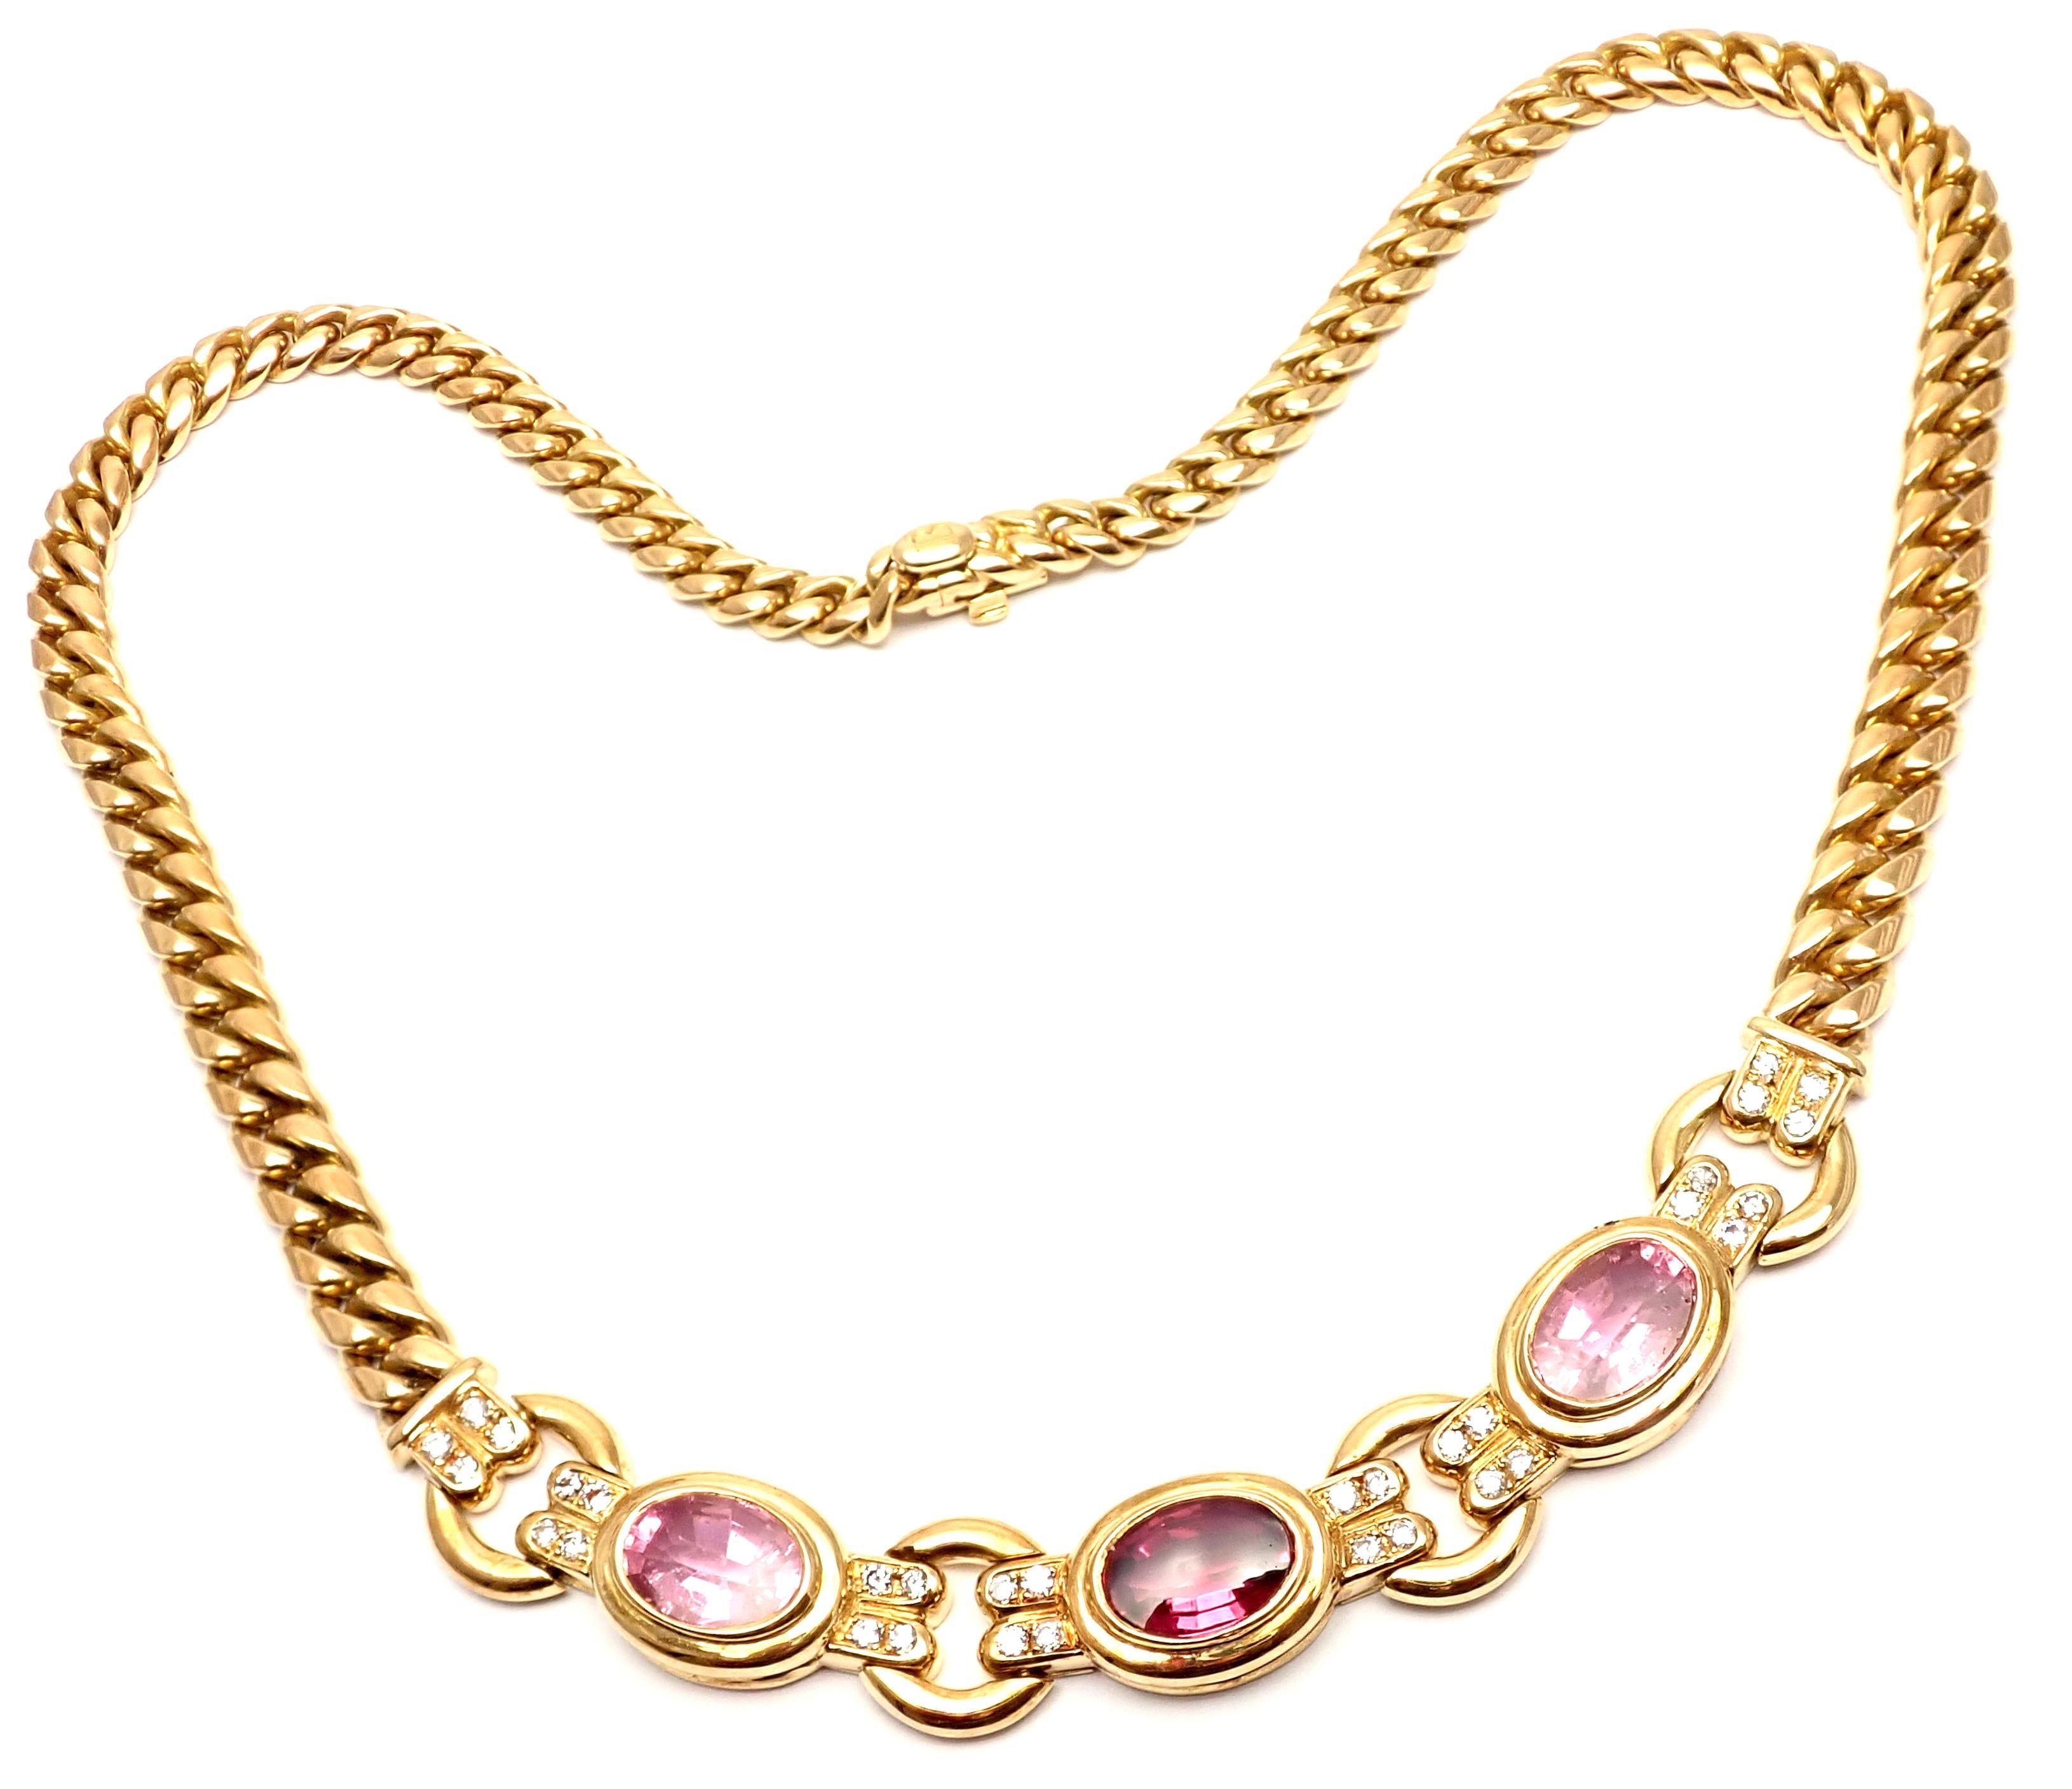 18k Yellow Gold Diamond Tourmaline And Pink Sapphire Link Necklace by Bulgari. 
With 32 Diamonds, total diamond weight: .96ct and 
2 10x6mm pink sapphires
1 10/6mm pink tourmaline
Details: 
Length: 16